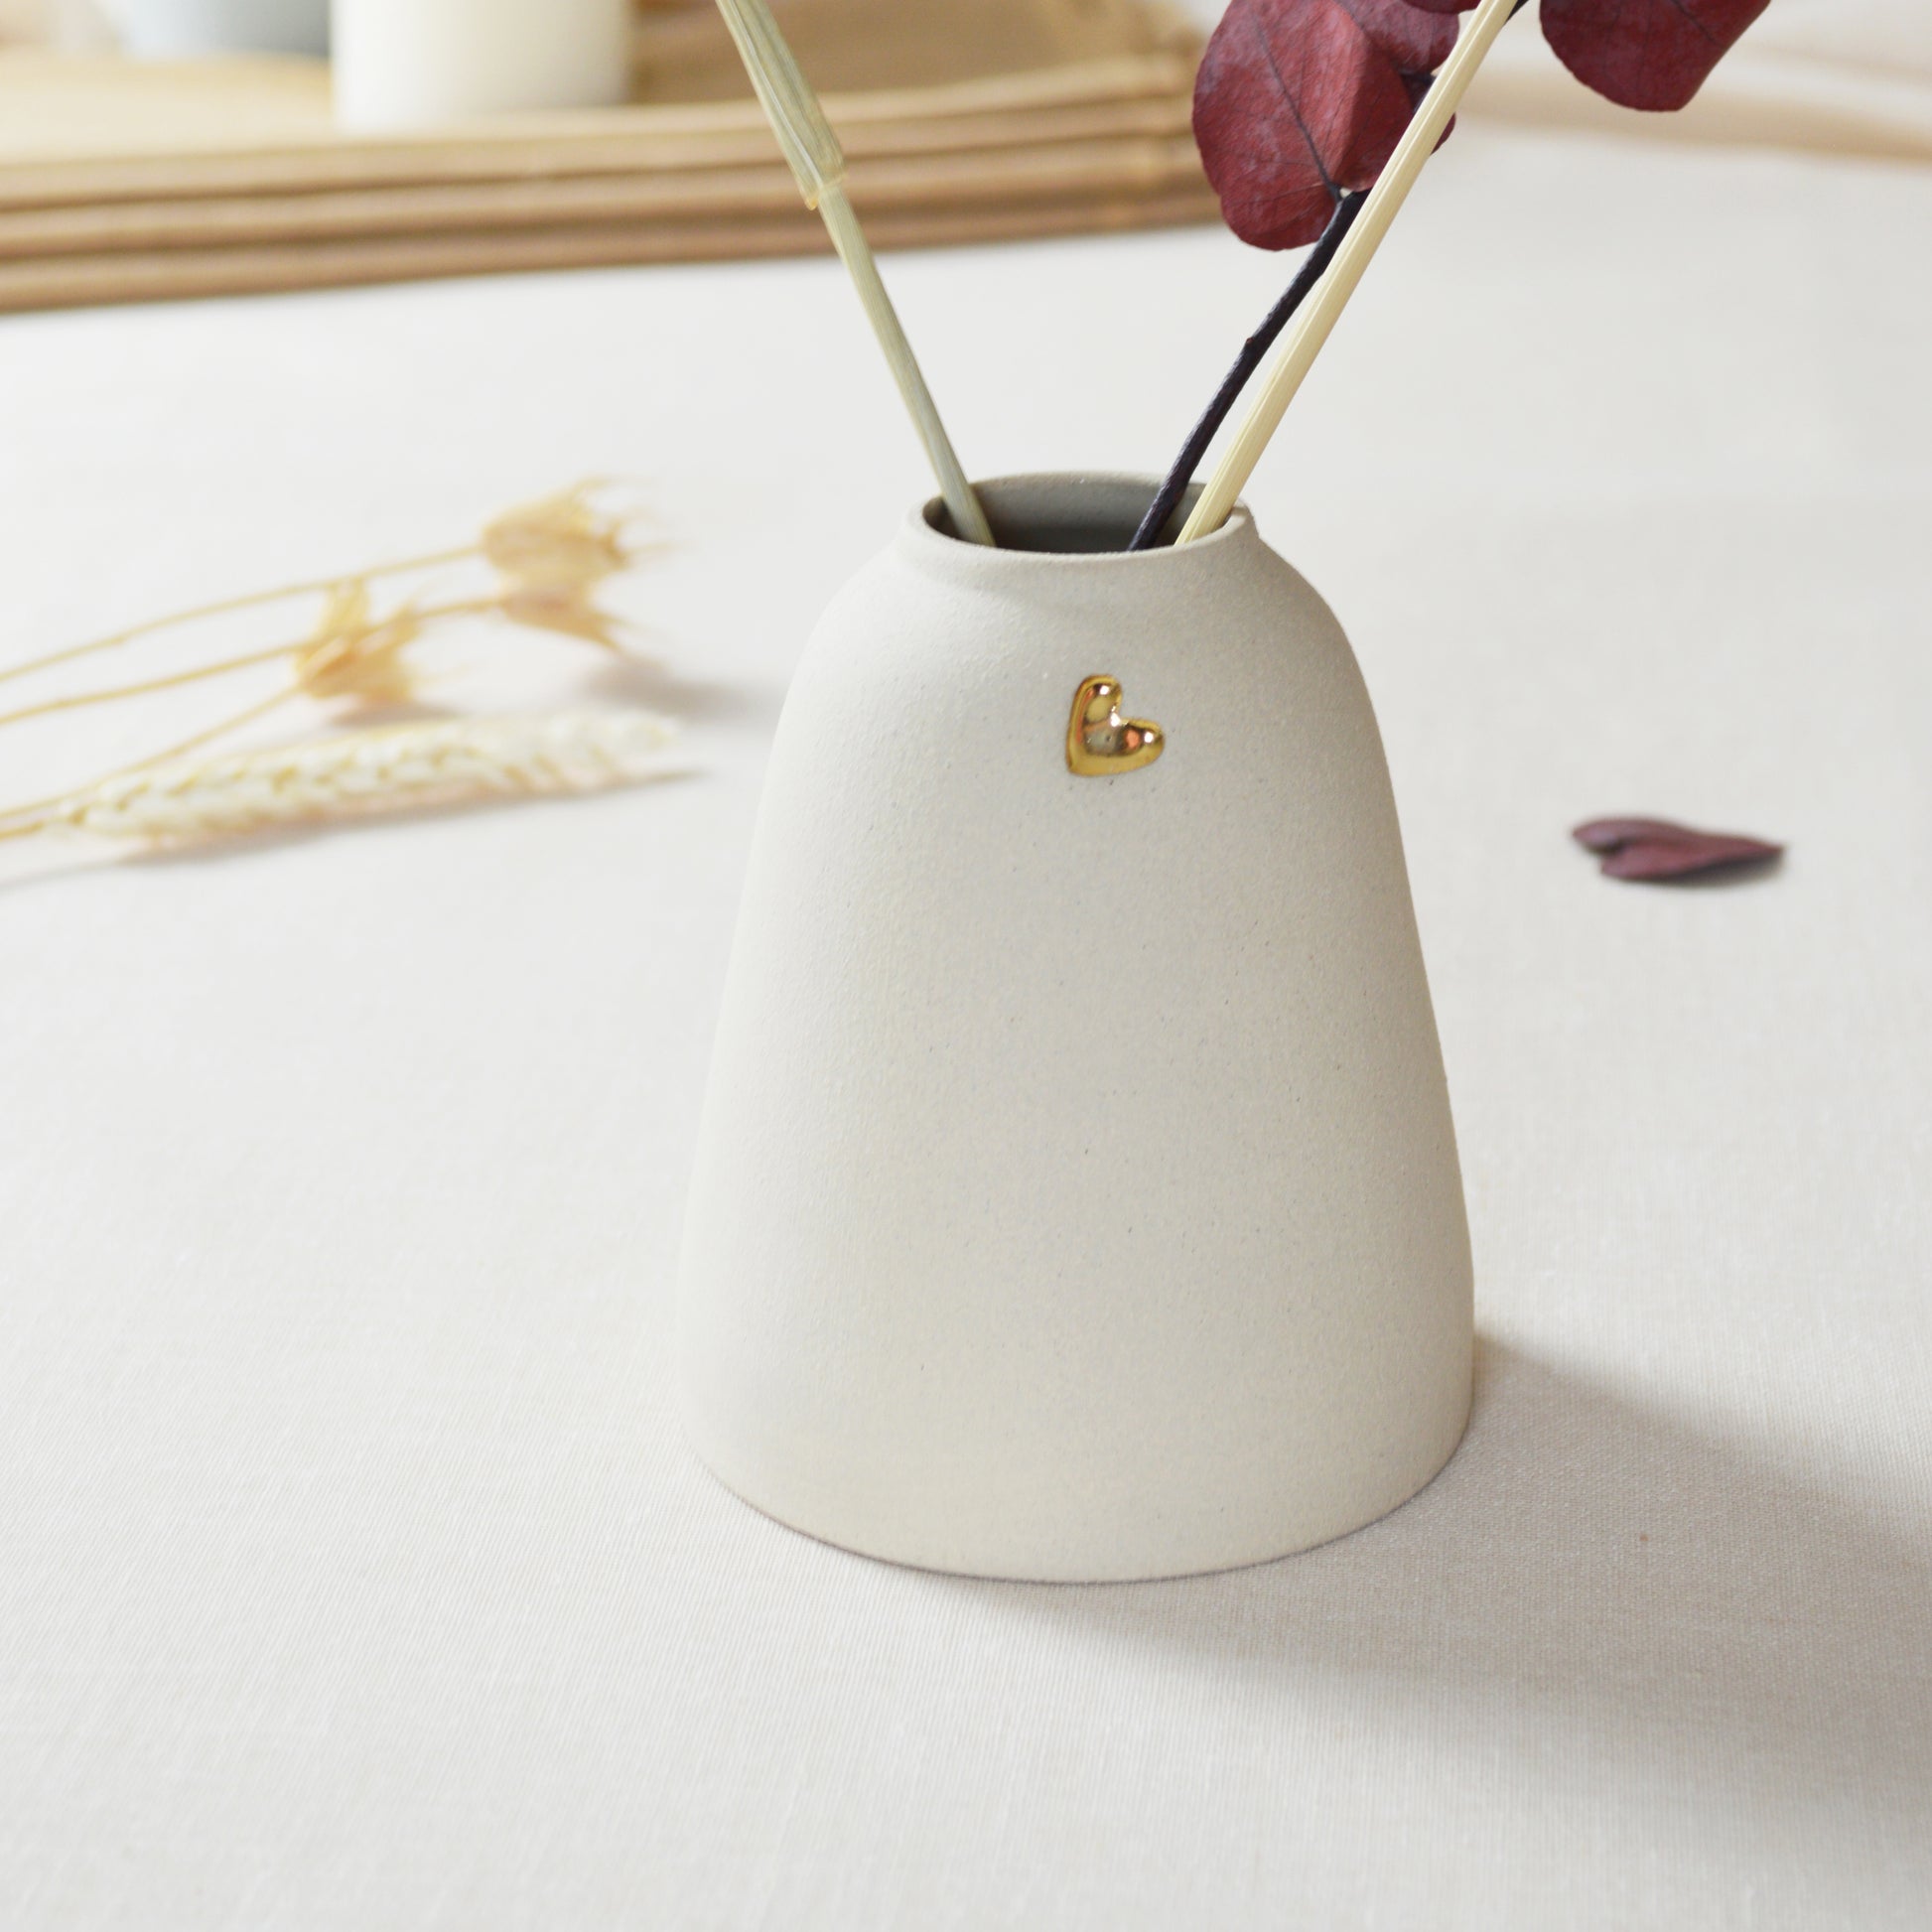 Handmade cream ceramic vase with a gold heart.